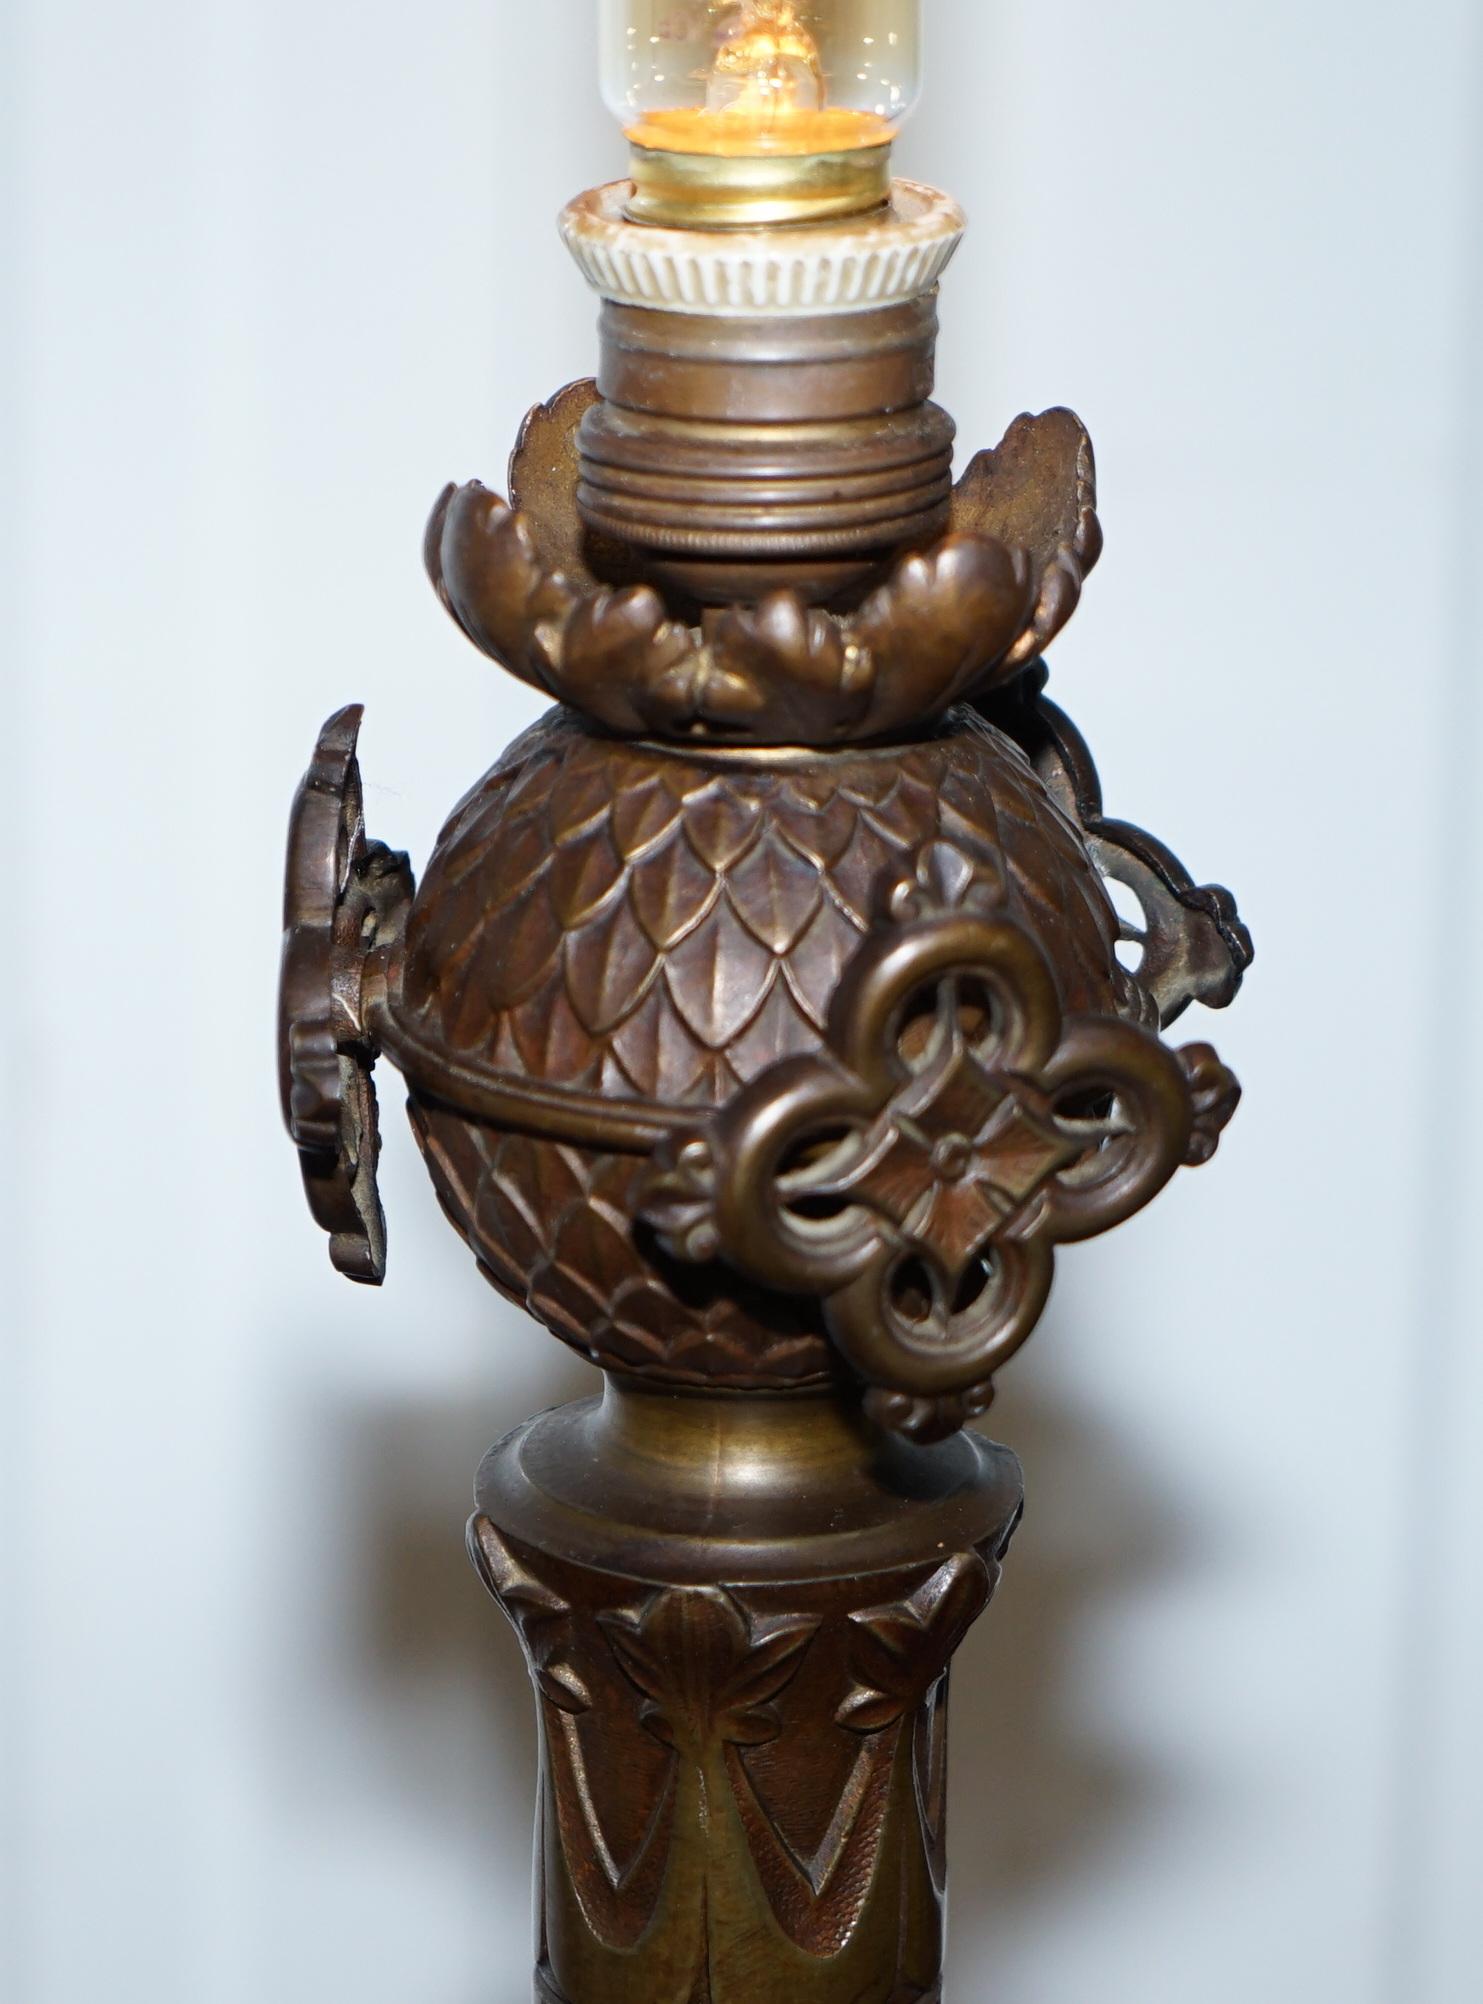 English Rare 1820 Pugin Gothic Large Solid Bronze Candlestick Lamp Conversion Religious